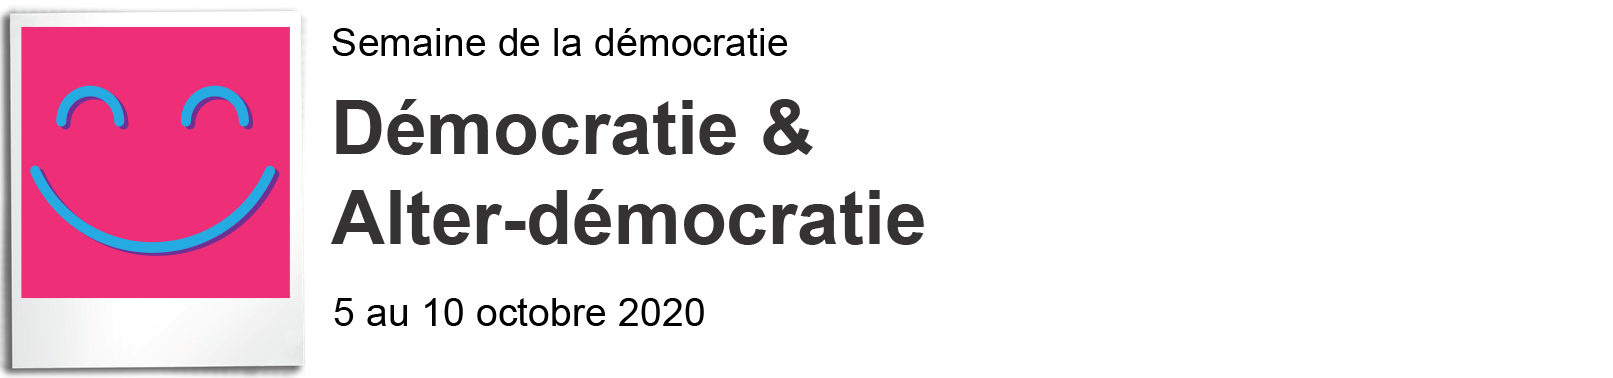 logo semaine de la démocratie 2020